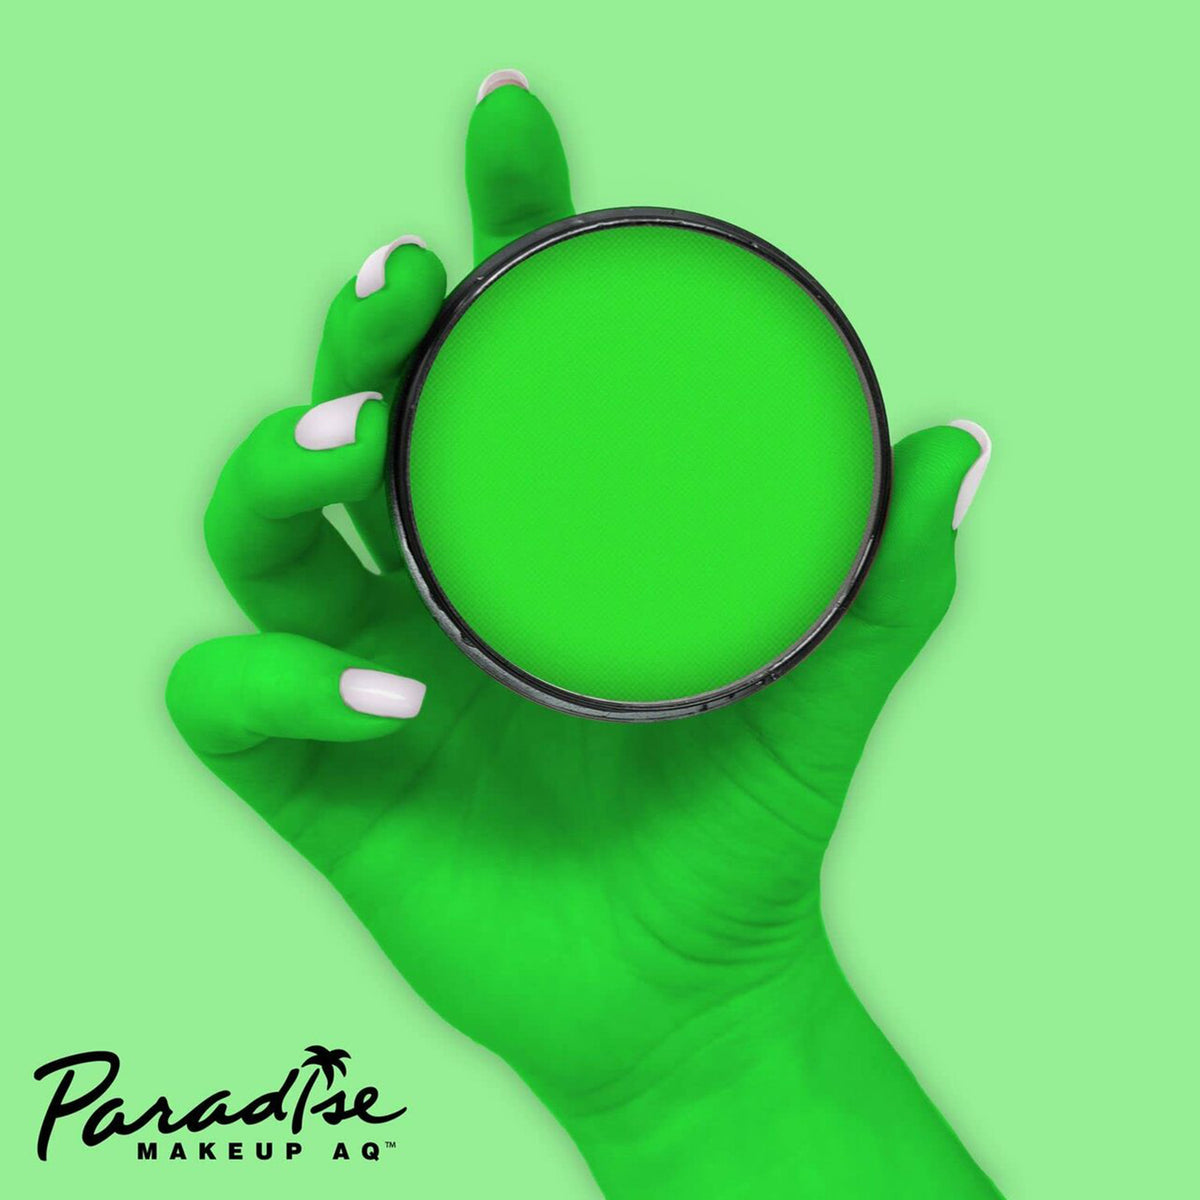 Paradise AQ Face Paint - Martian/Neon Green (1.4 oz/ 40 gm)